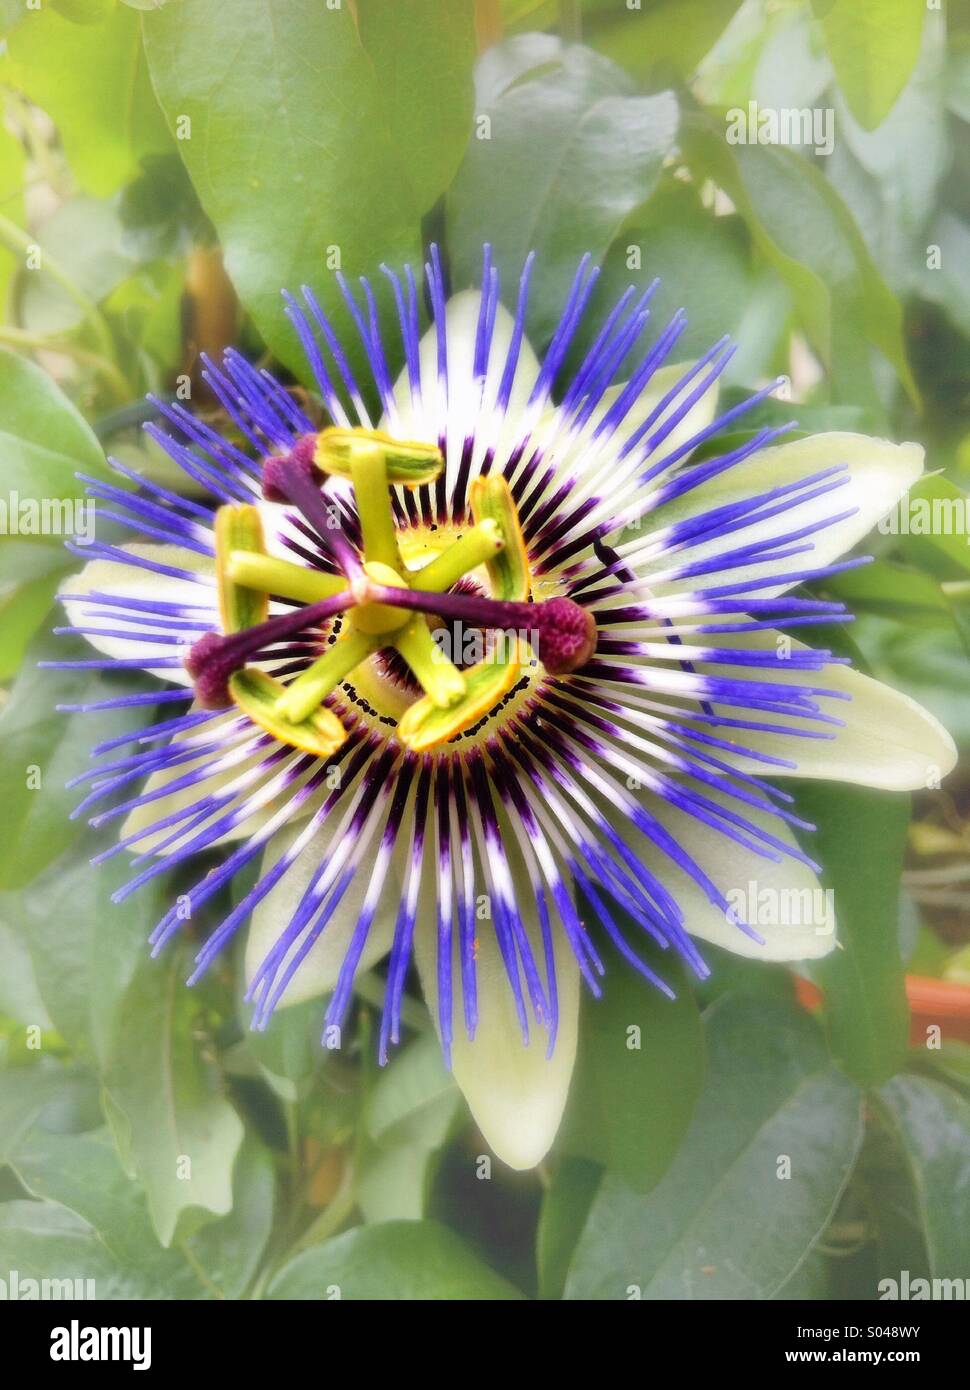 Purple Passion flower Stockfoto